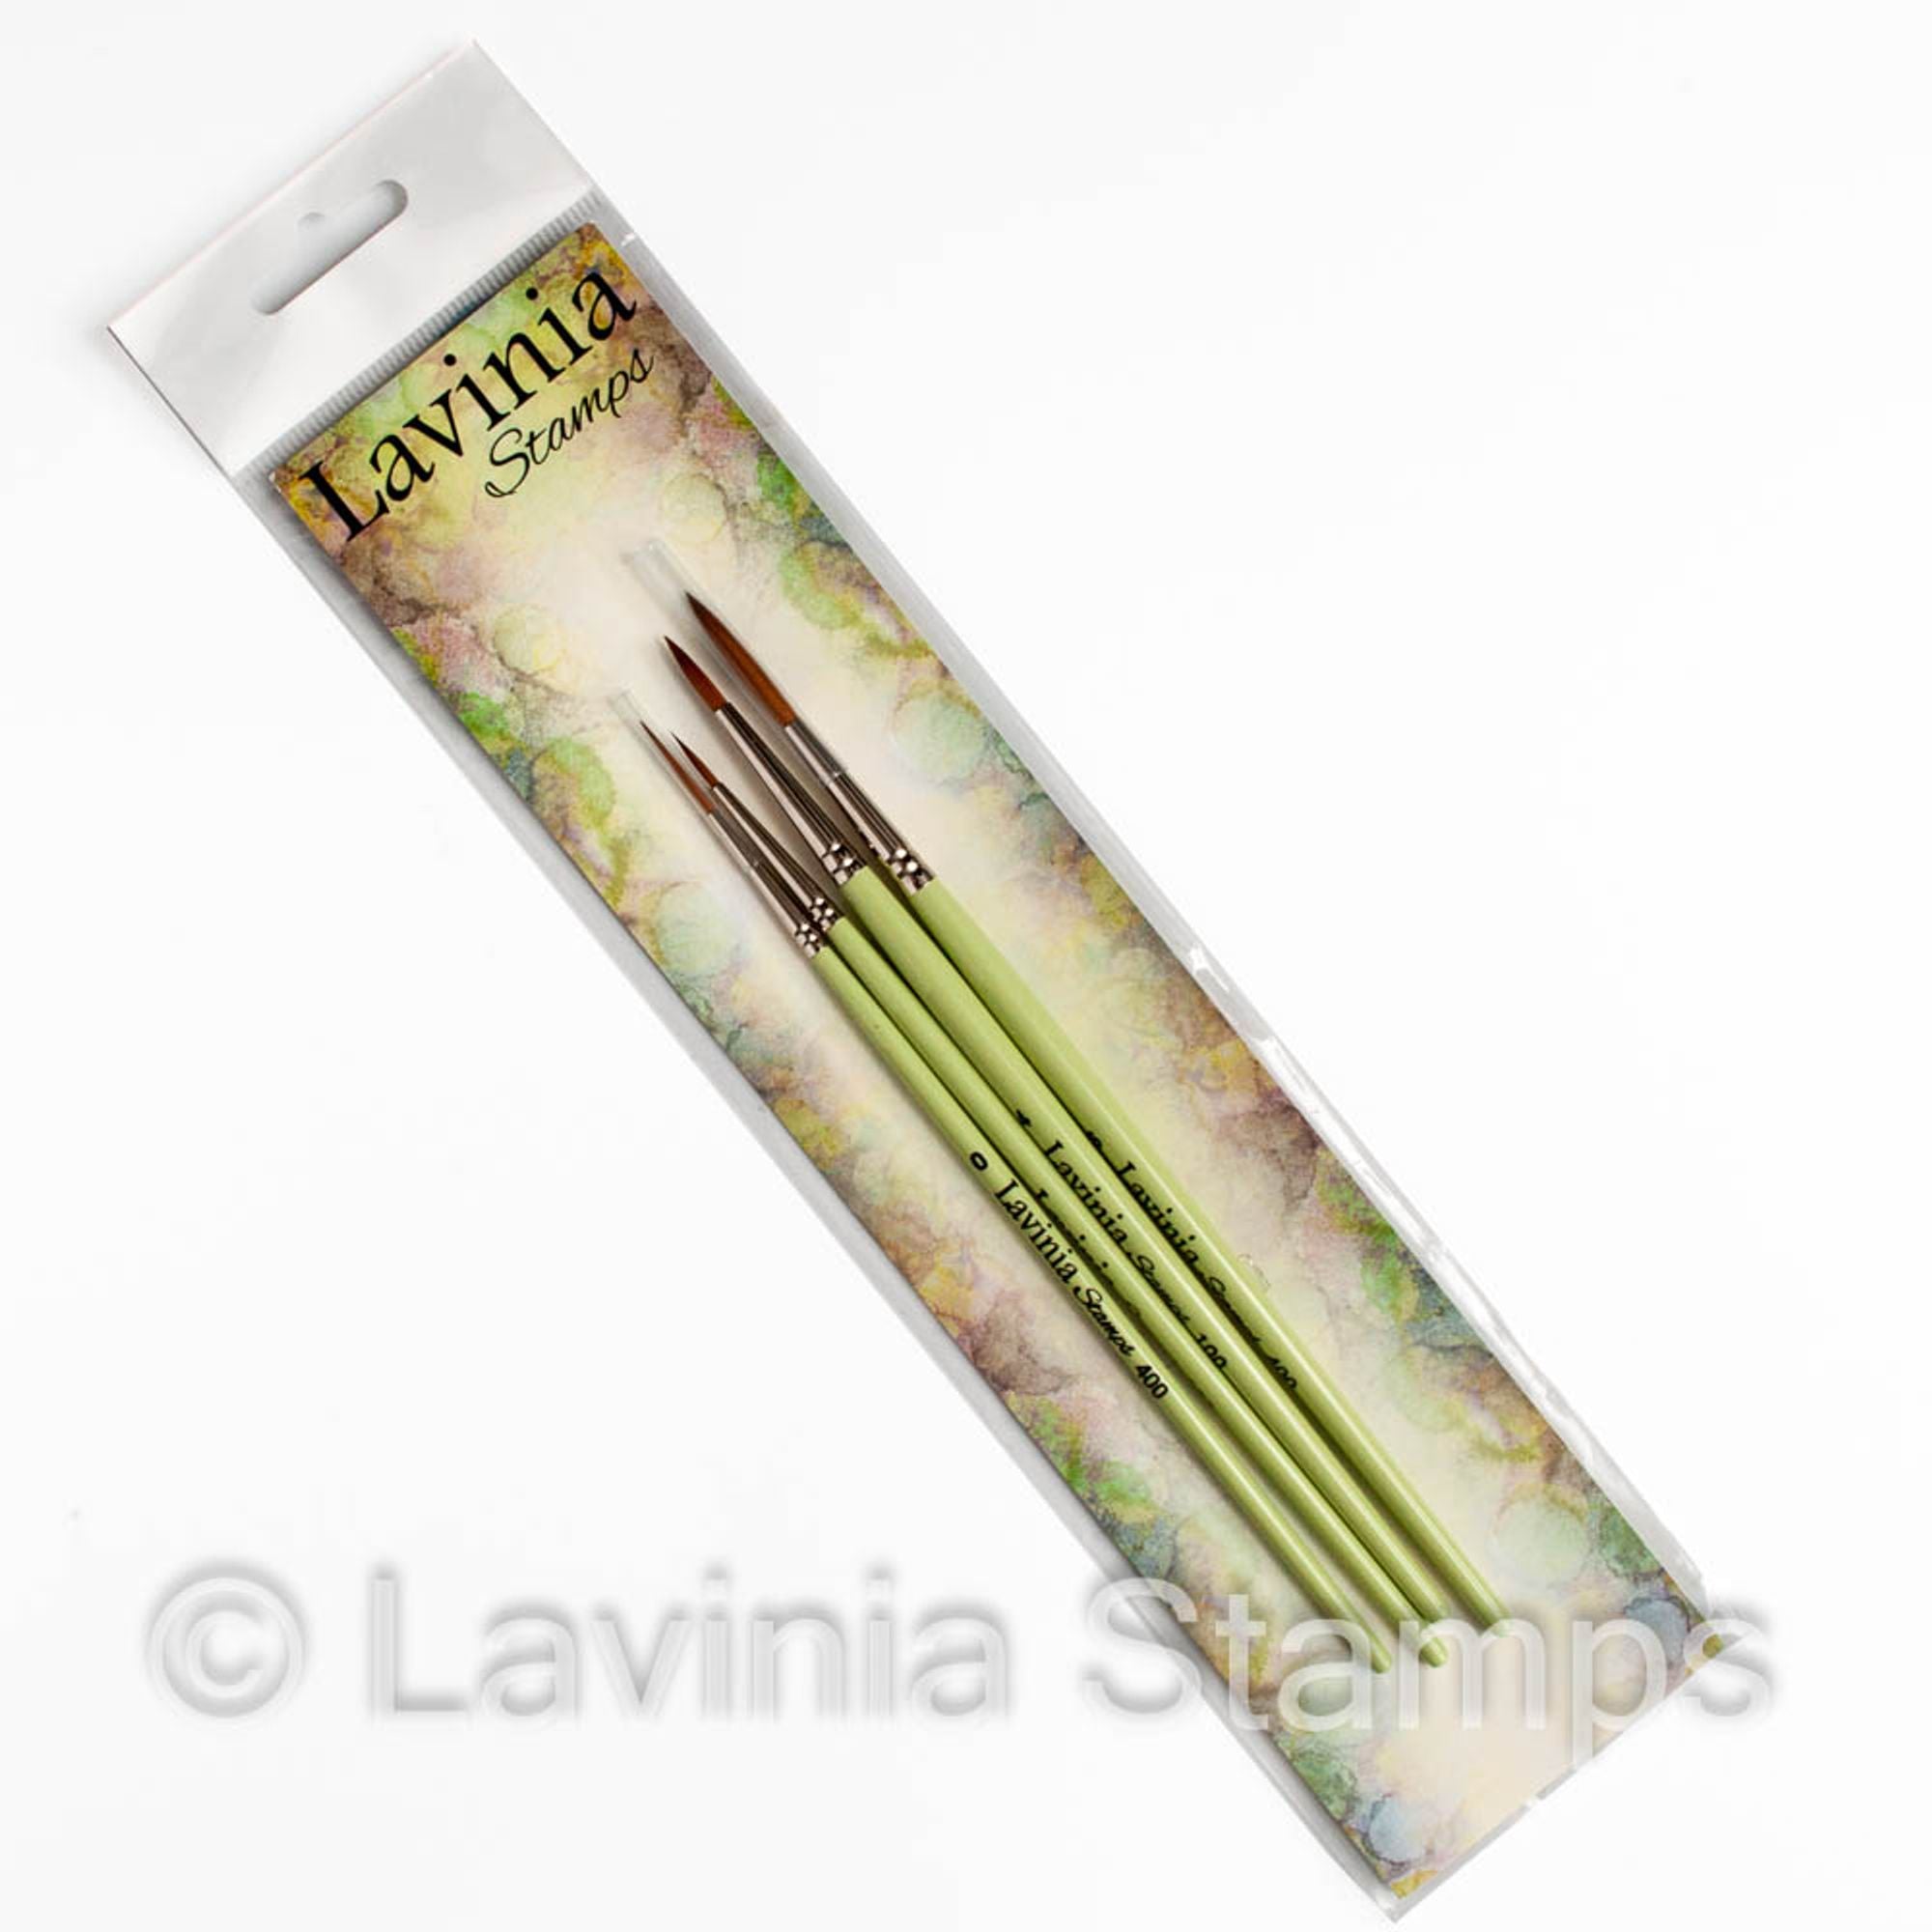 Lavinia Stamps - Lavinia Watercolour Brush Set 1